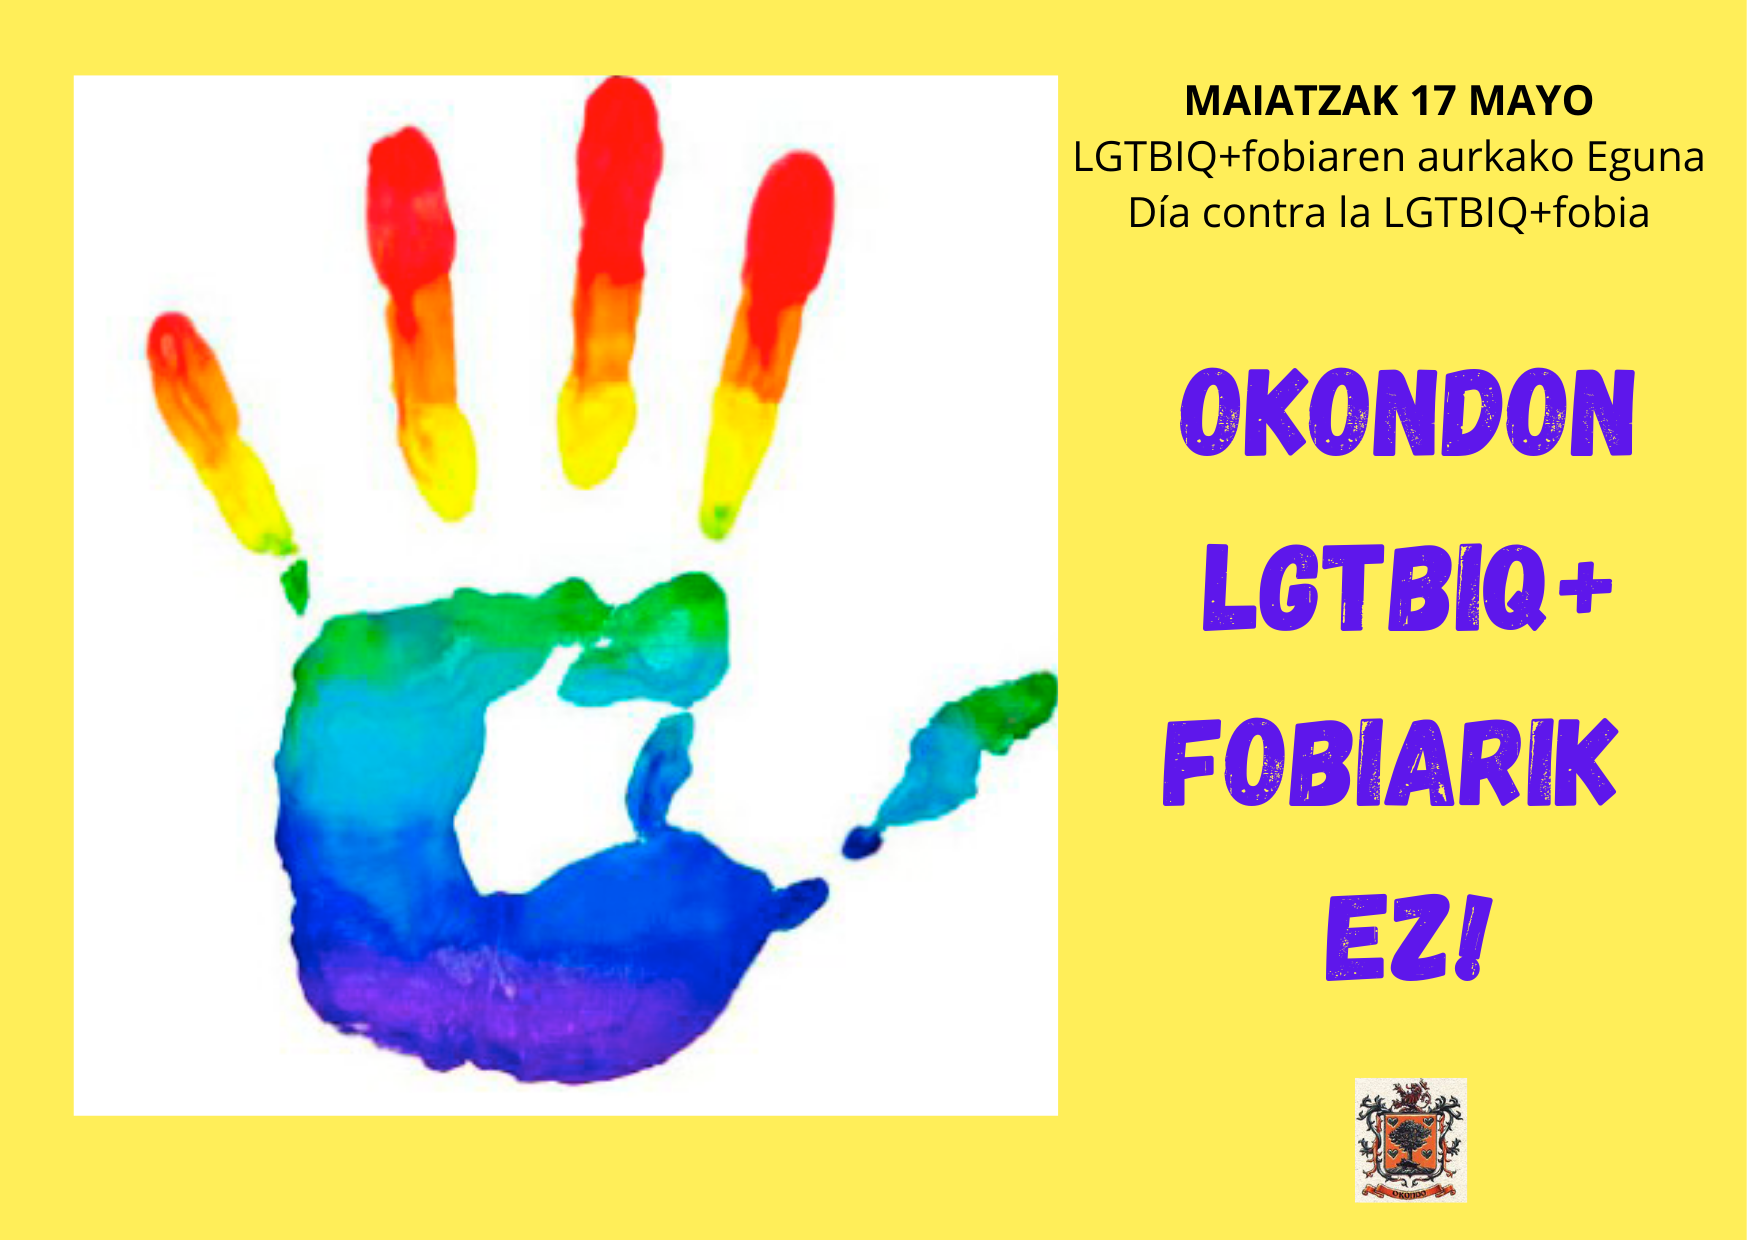 17 de mayo, Día conta la LGTBIQ+fobia